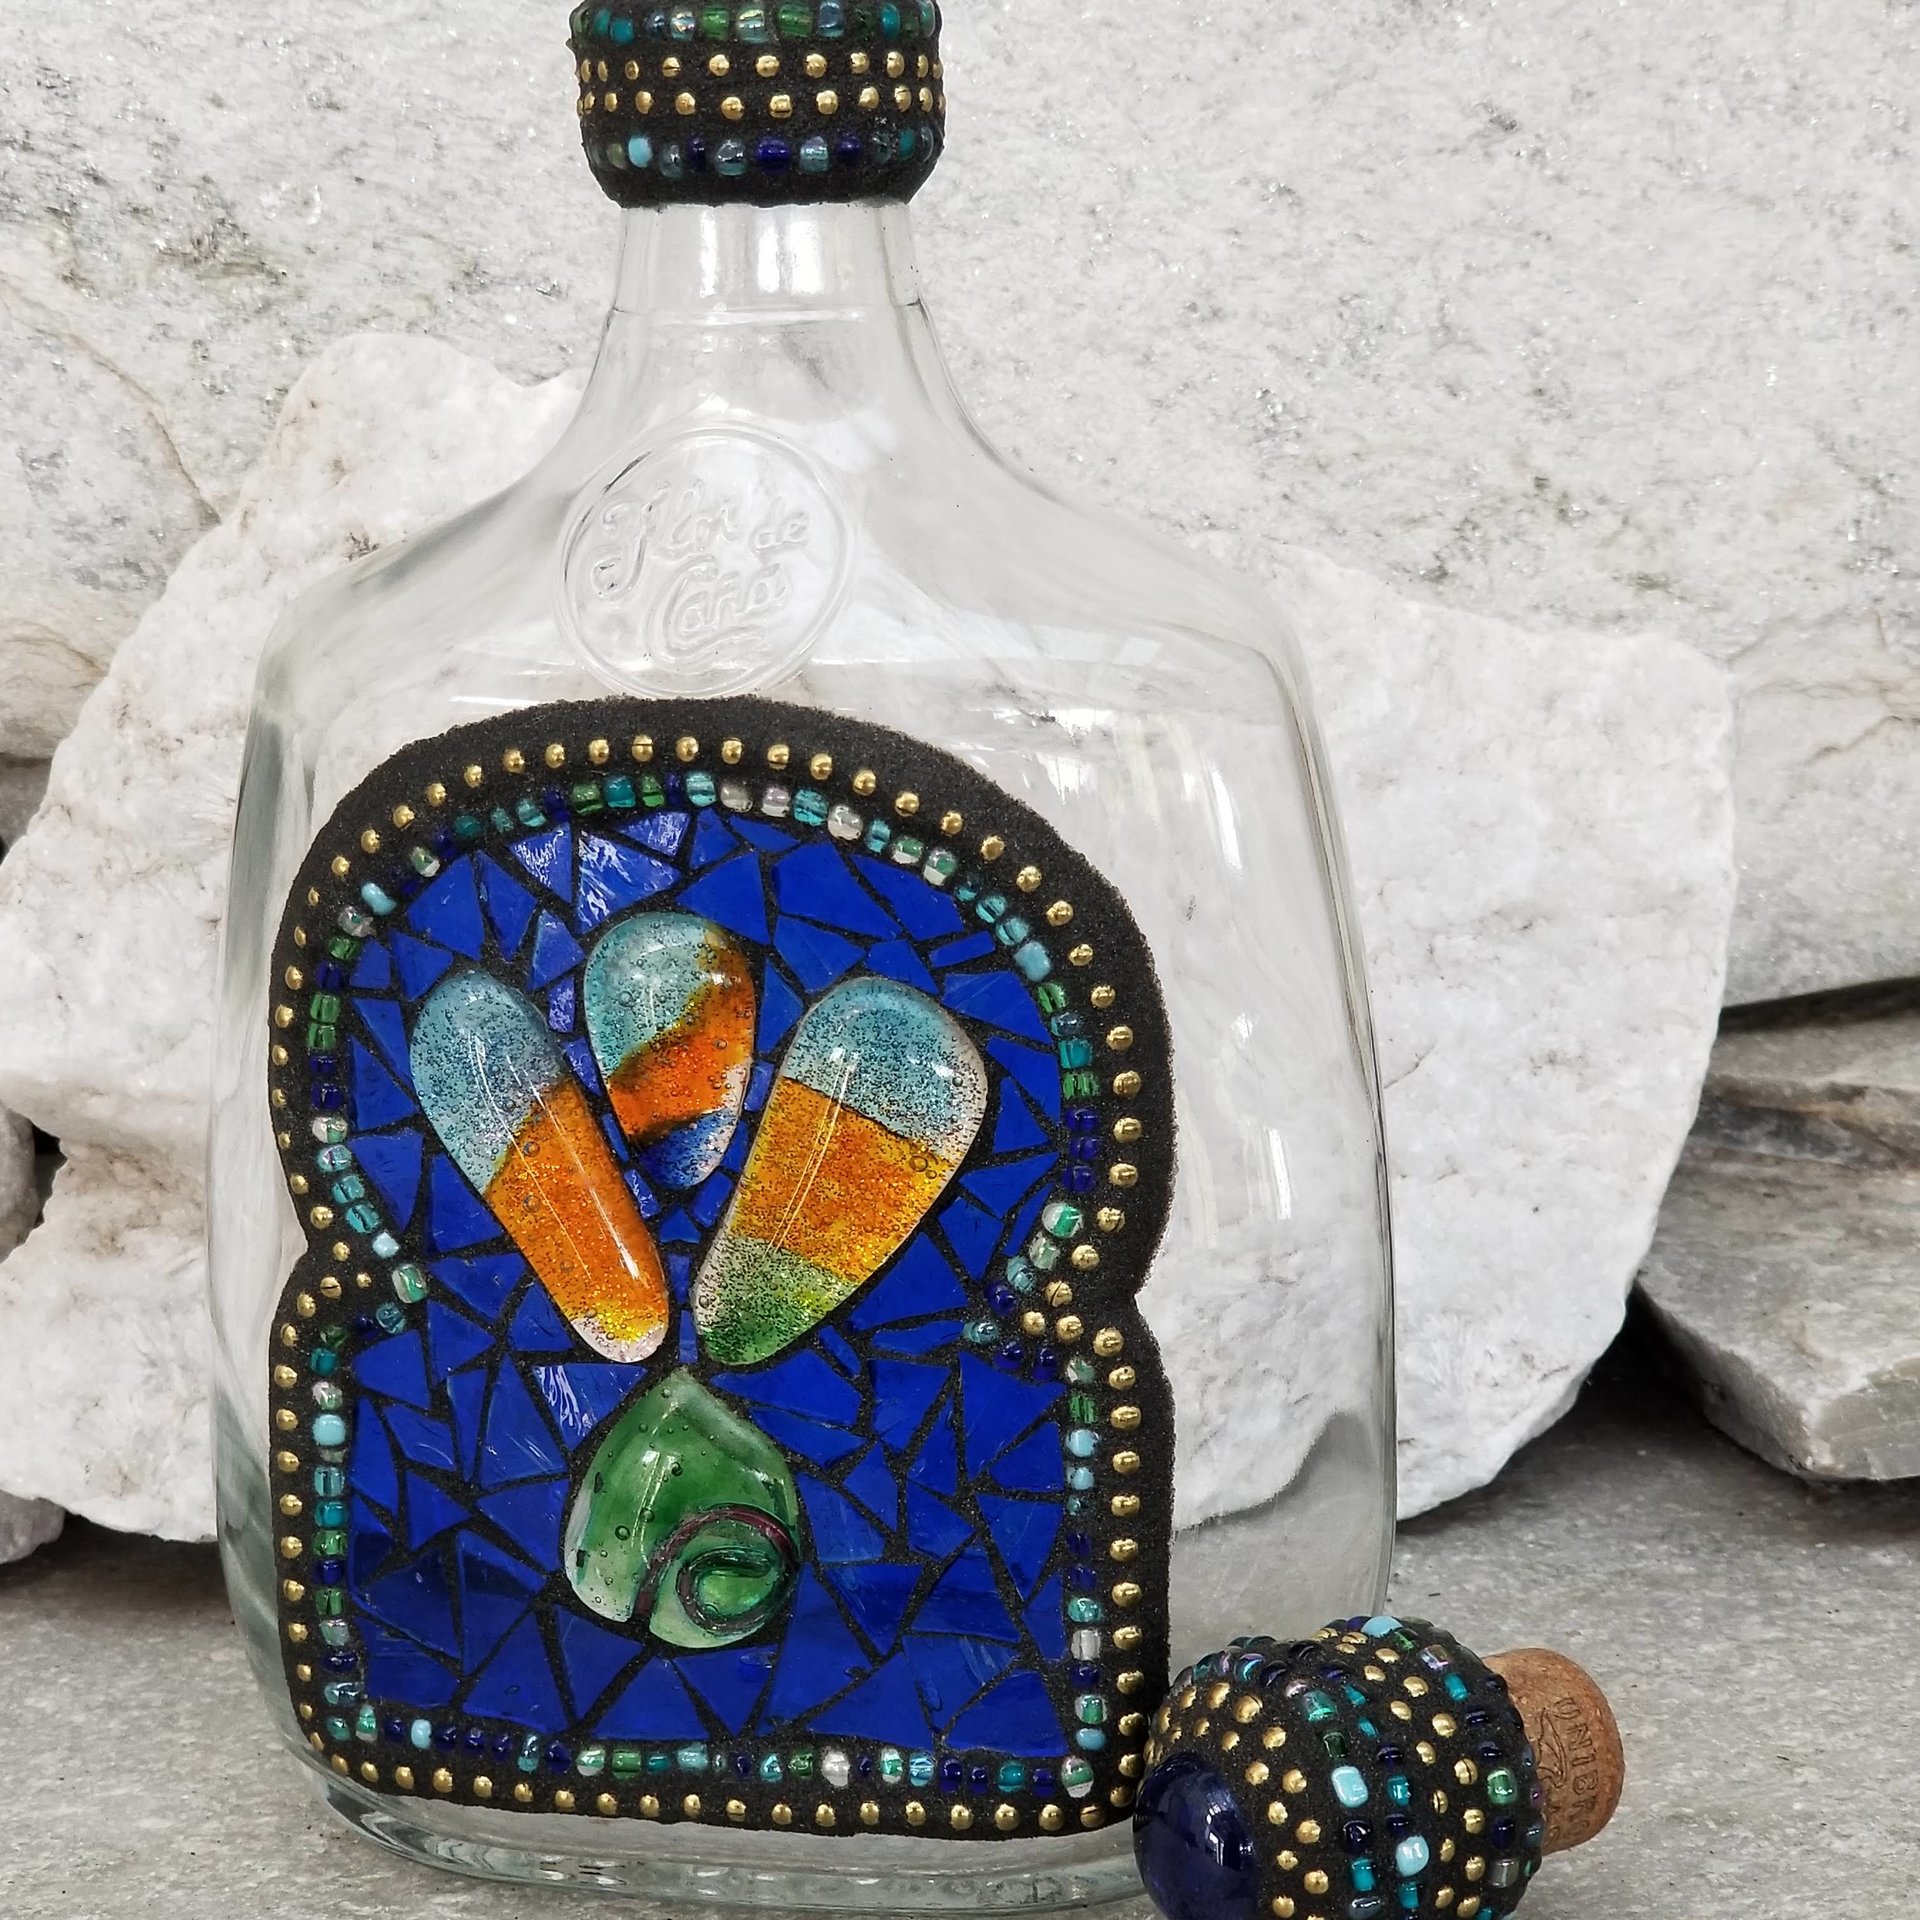 Mosaic Liquor Bottle “Exclaimation” Up-cycled Decanter